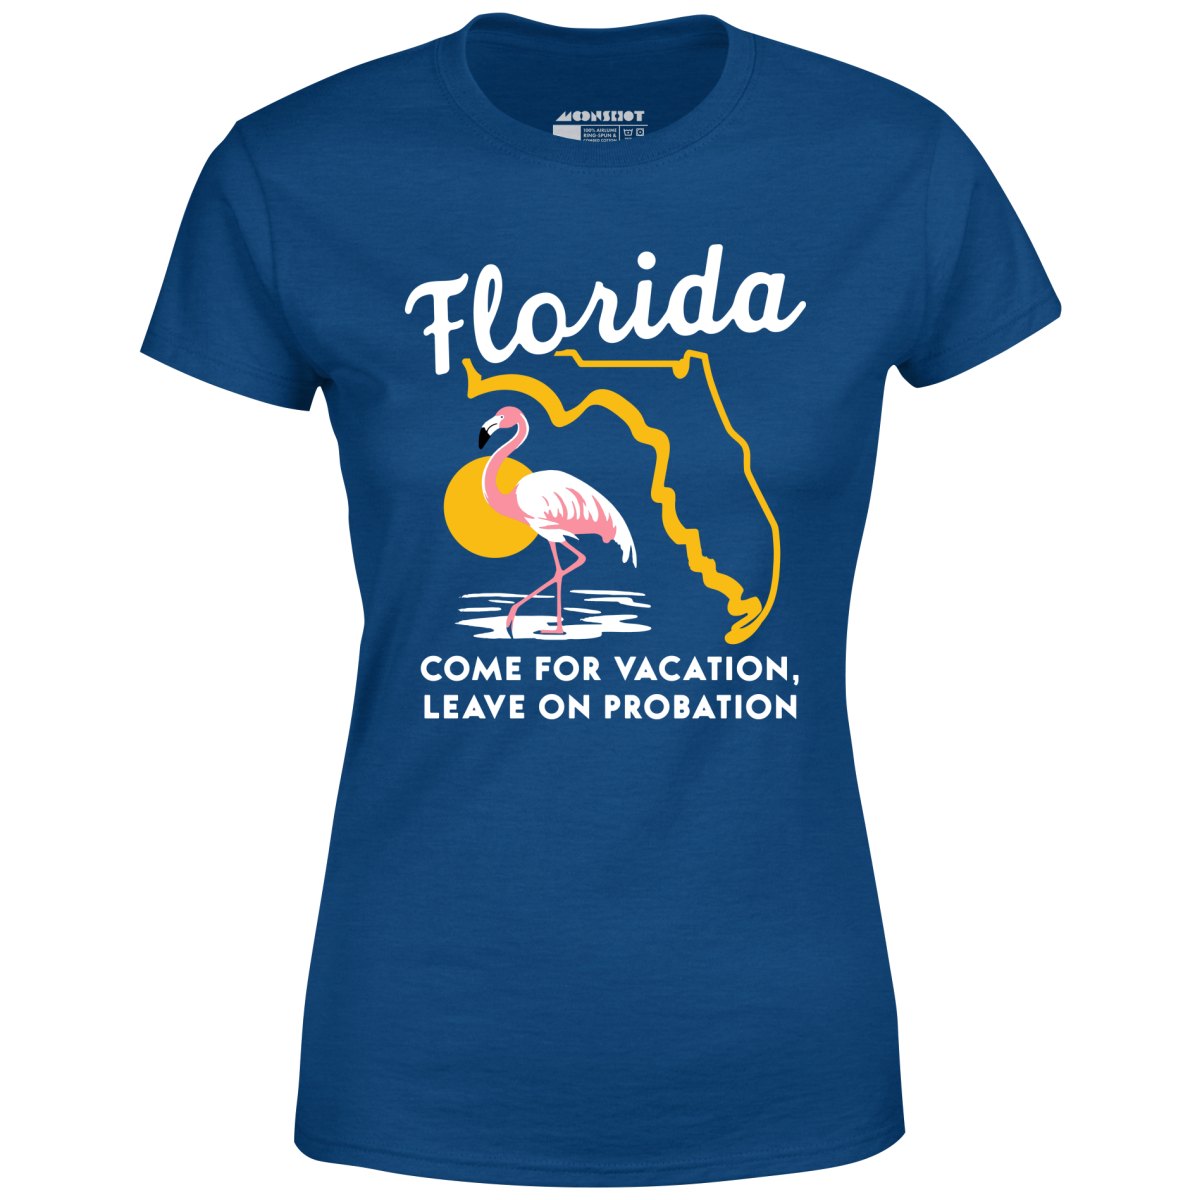 Florida Travel - Women's T-Shirt